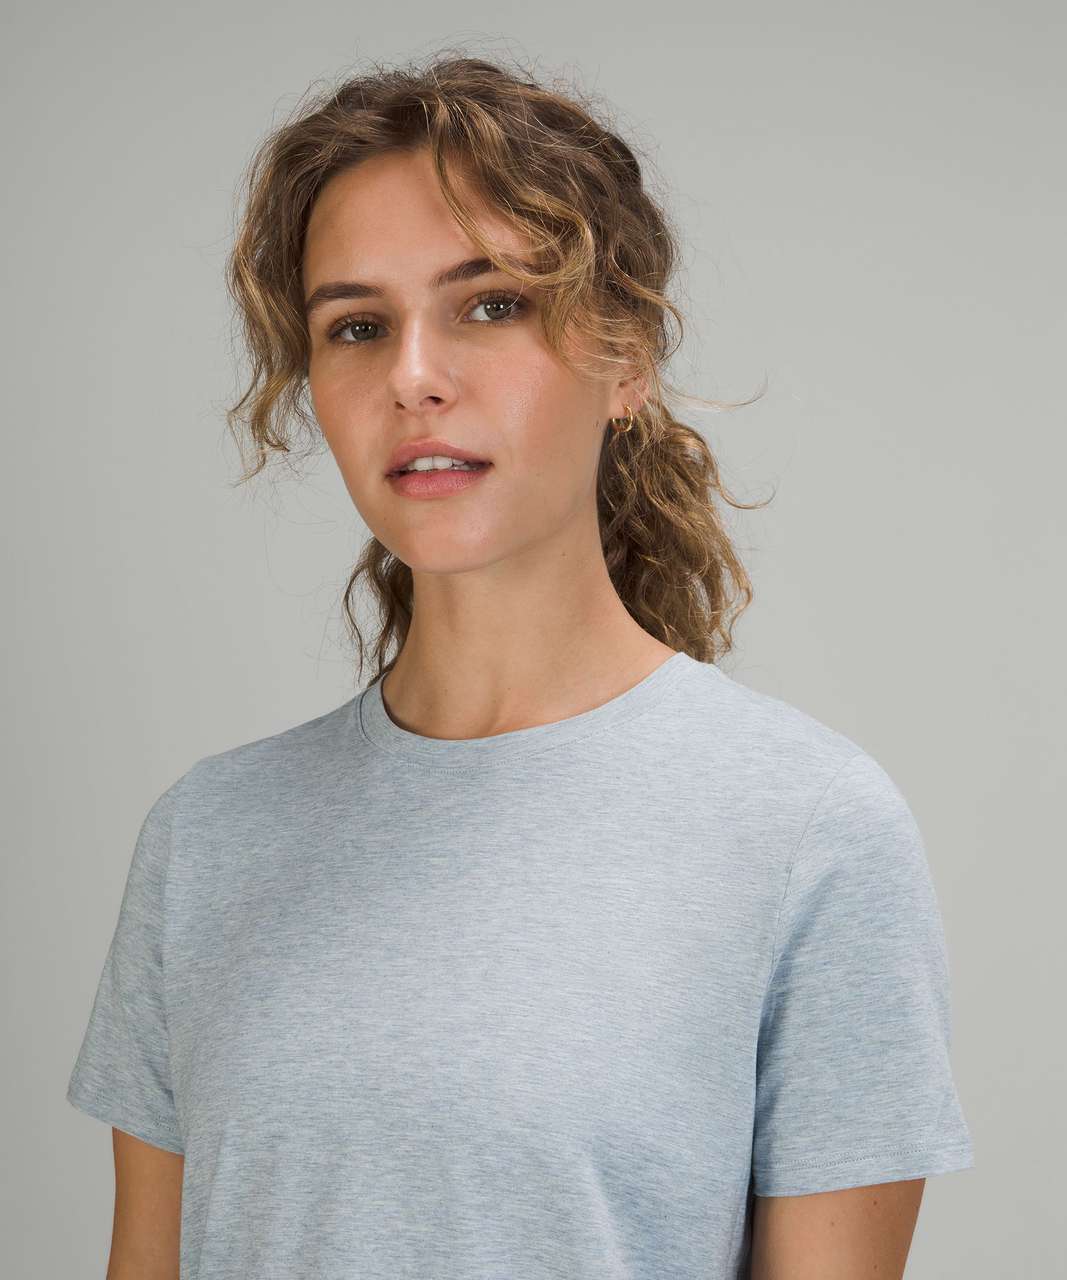 Lululemon Love Crew Short Sleeve T-Shirt - Heathered Chambray